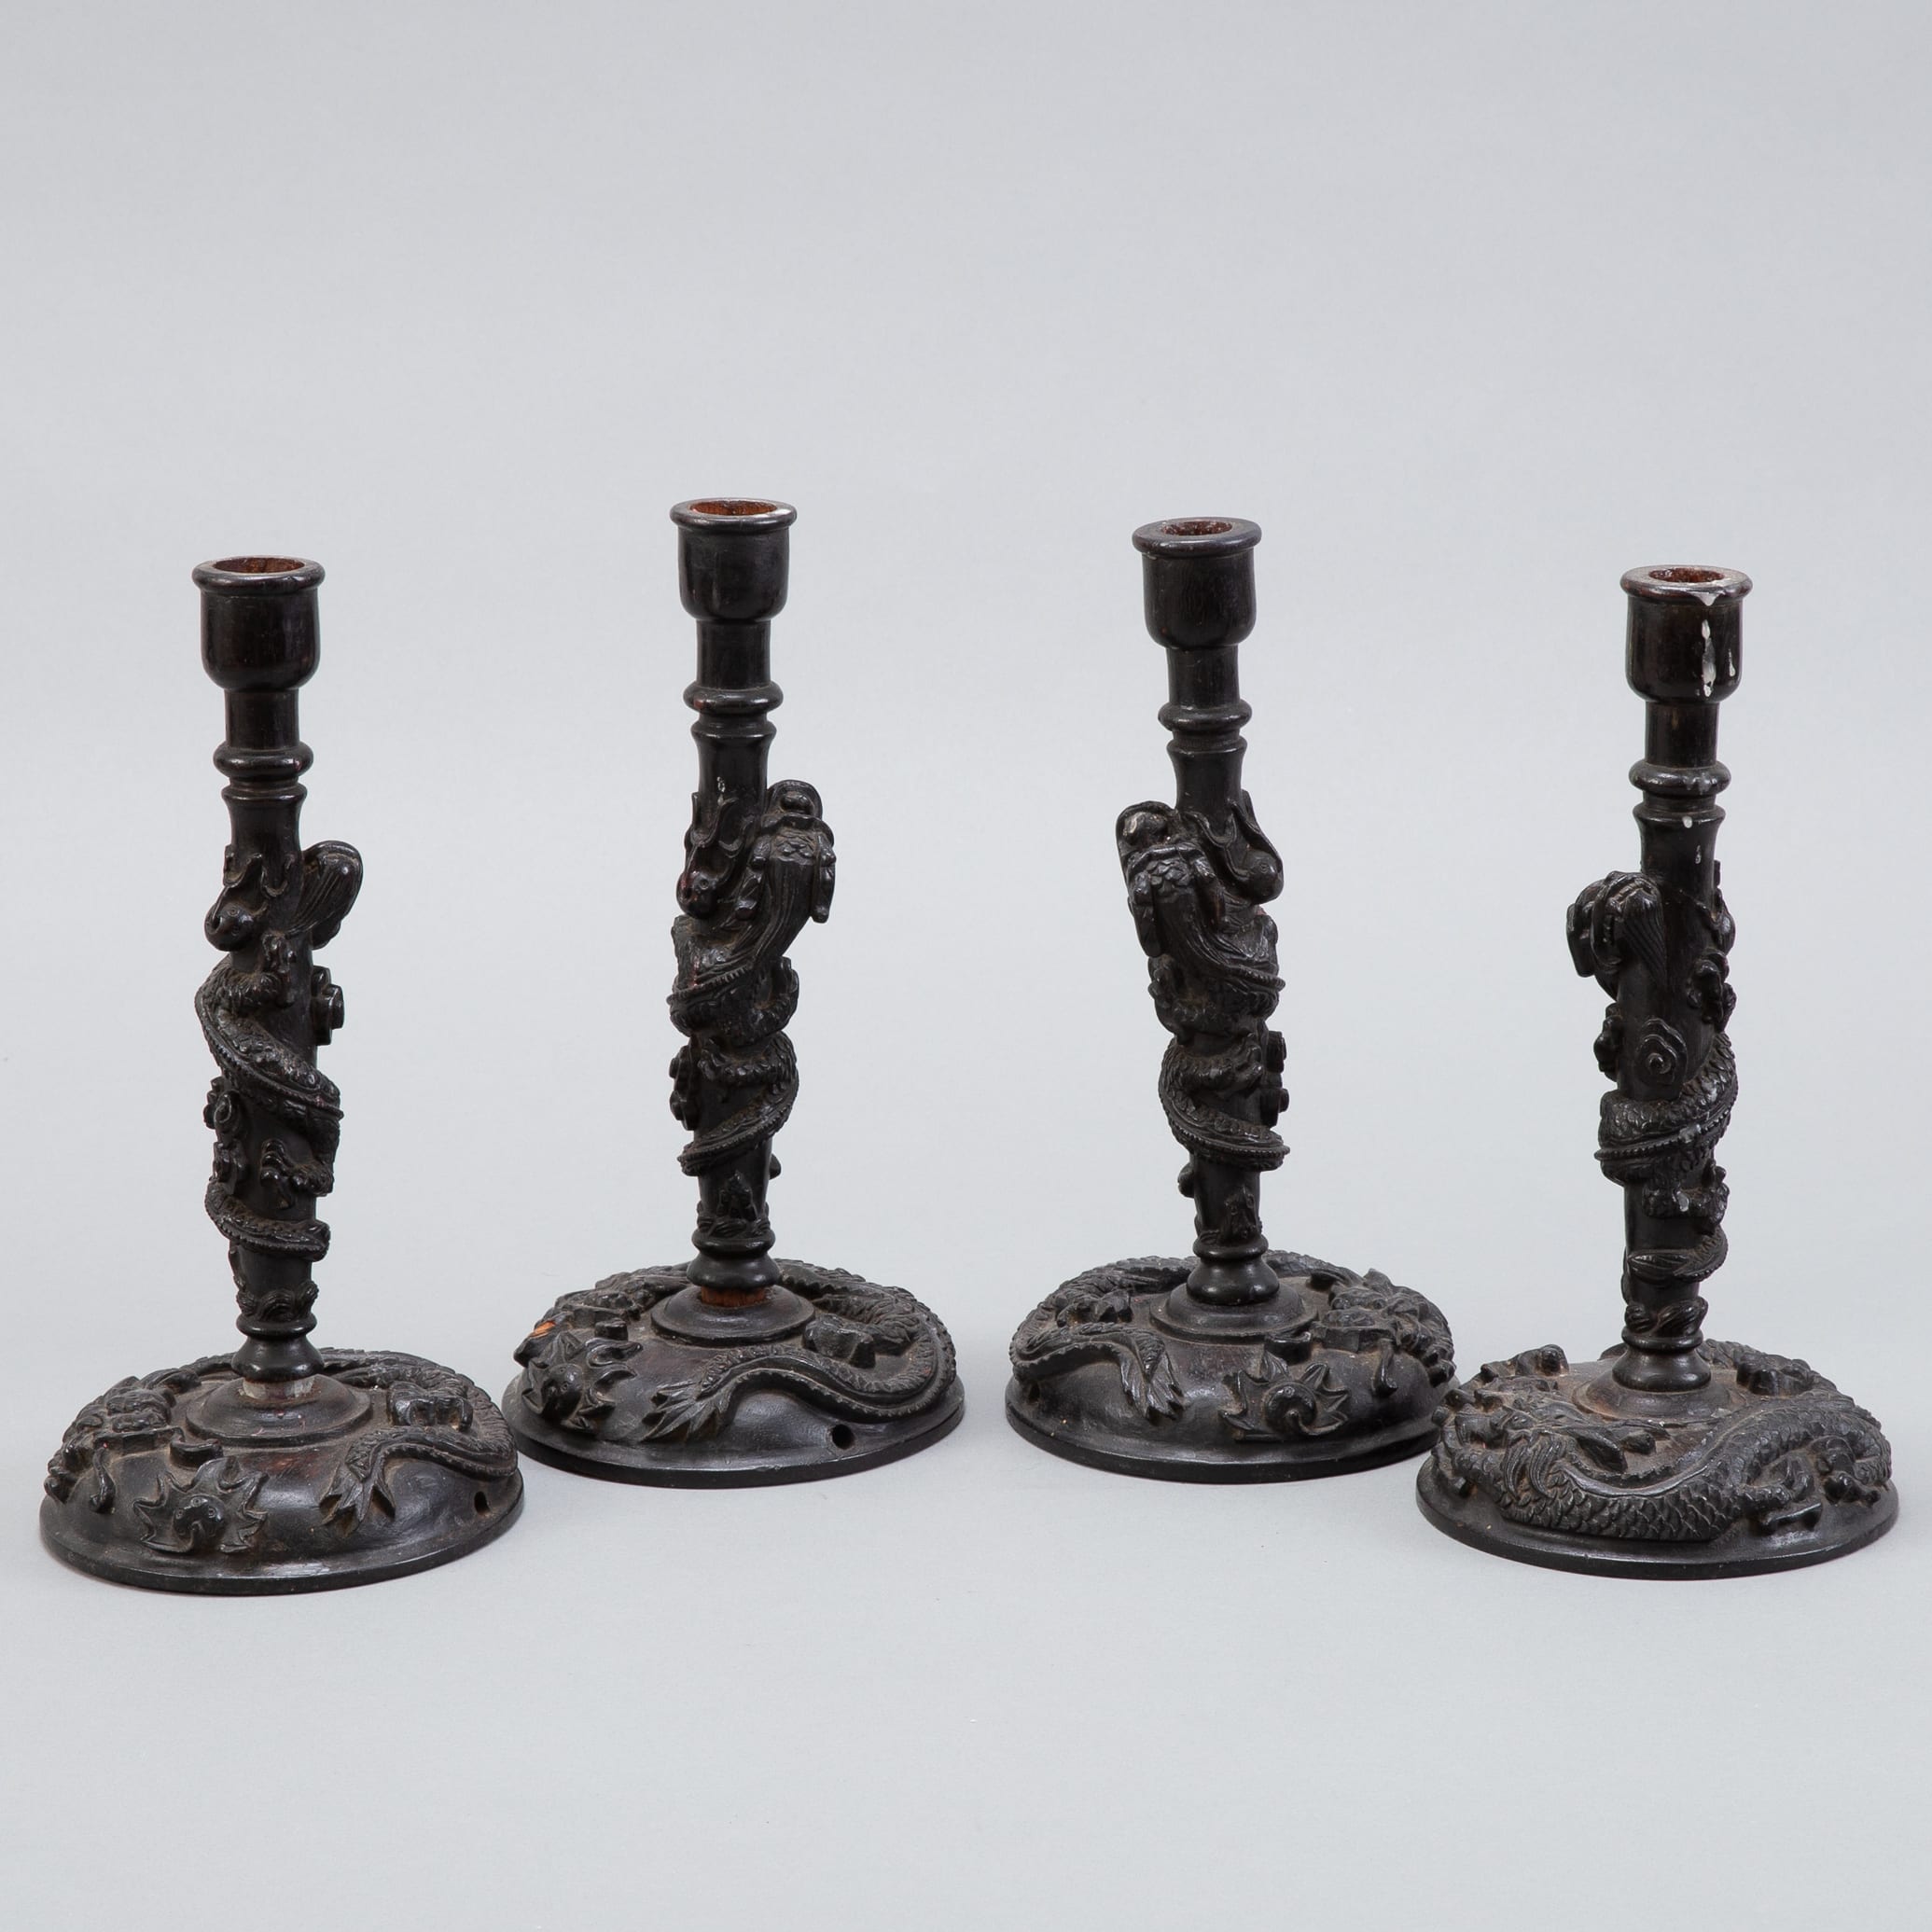 Lot 280: Set of 4 Chinese Dragon Rosewood Candlesticks